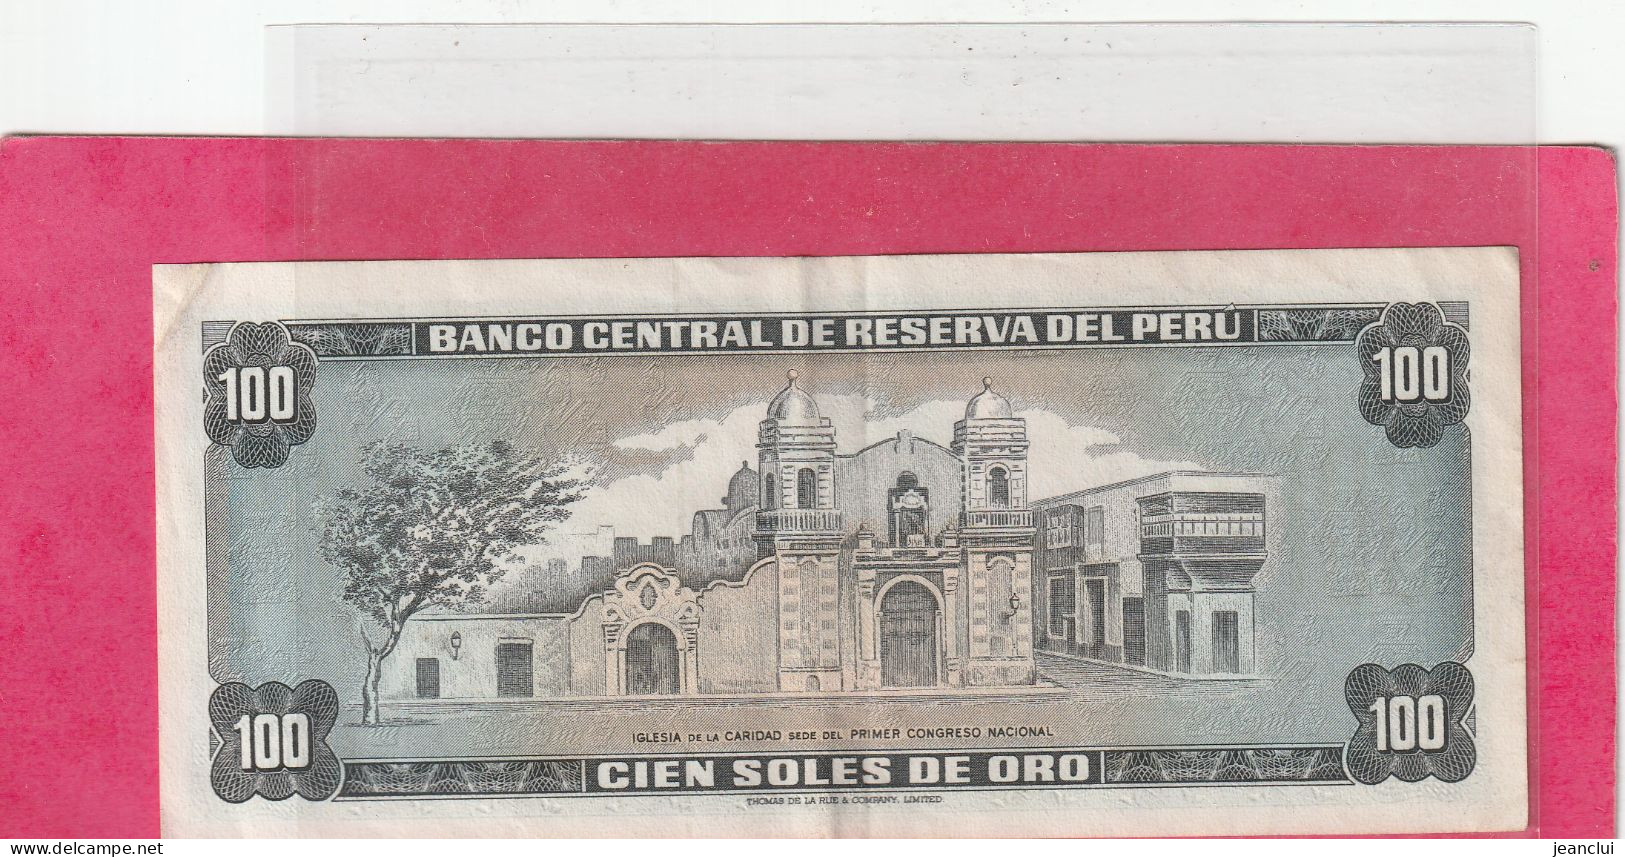 BANCO CENTRAL DE RESERVA DEL PERU .  100 SOLES DE ORO  .  16 DE MAYO DE 1974  . N°  G 121495 .  2 SCANNES  .  BEL ETAT - Perú